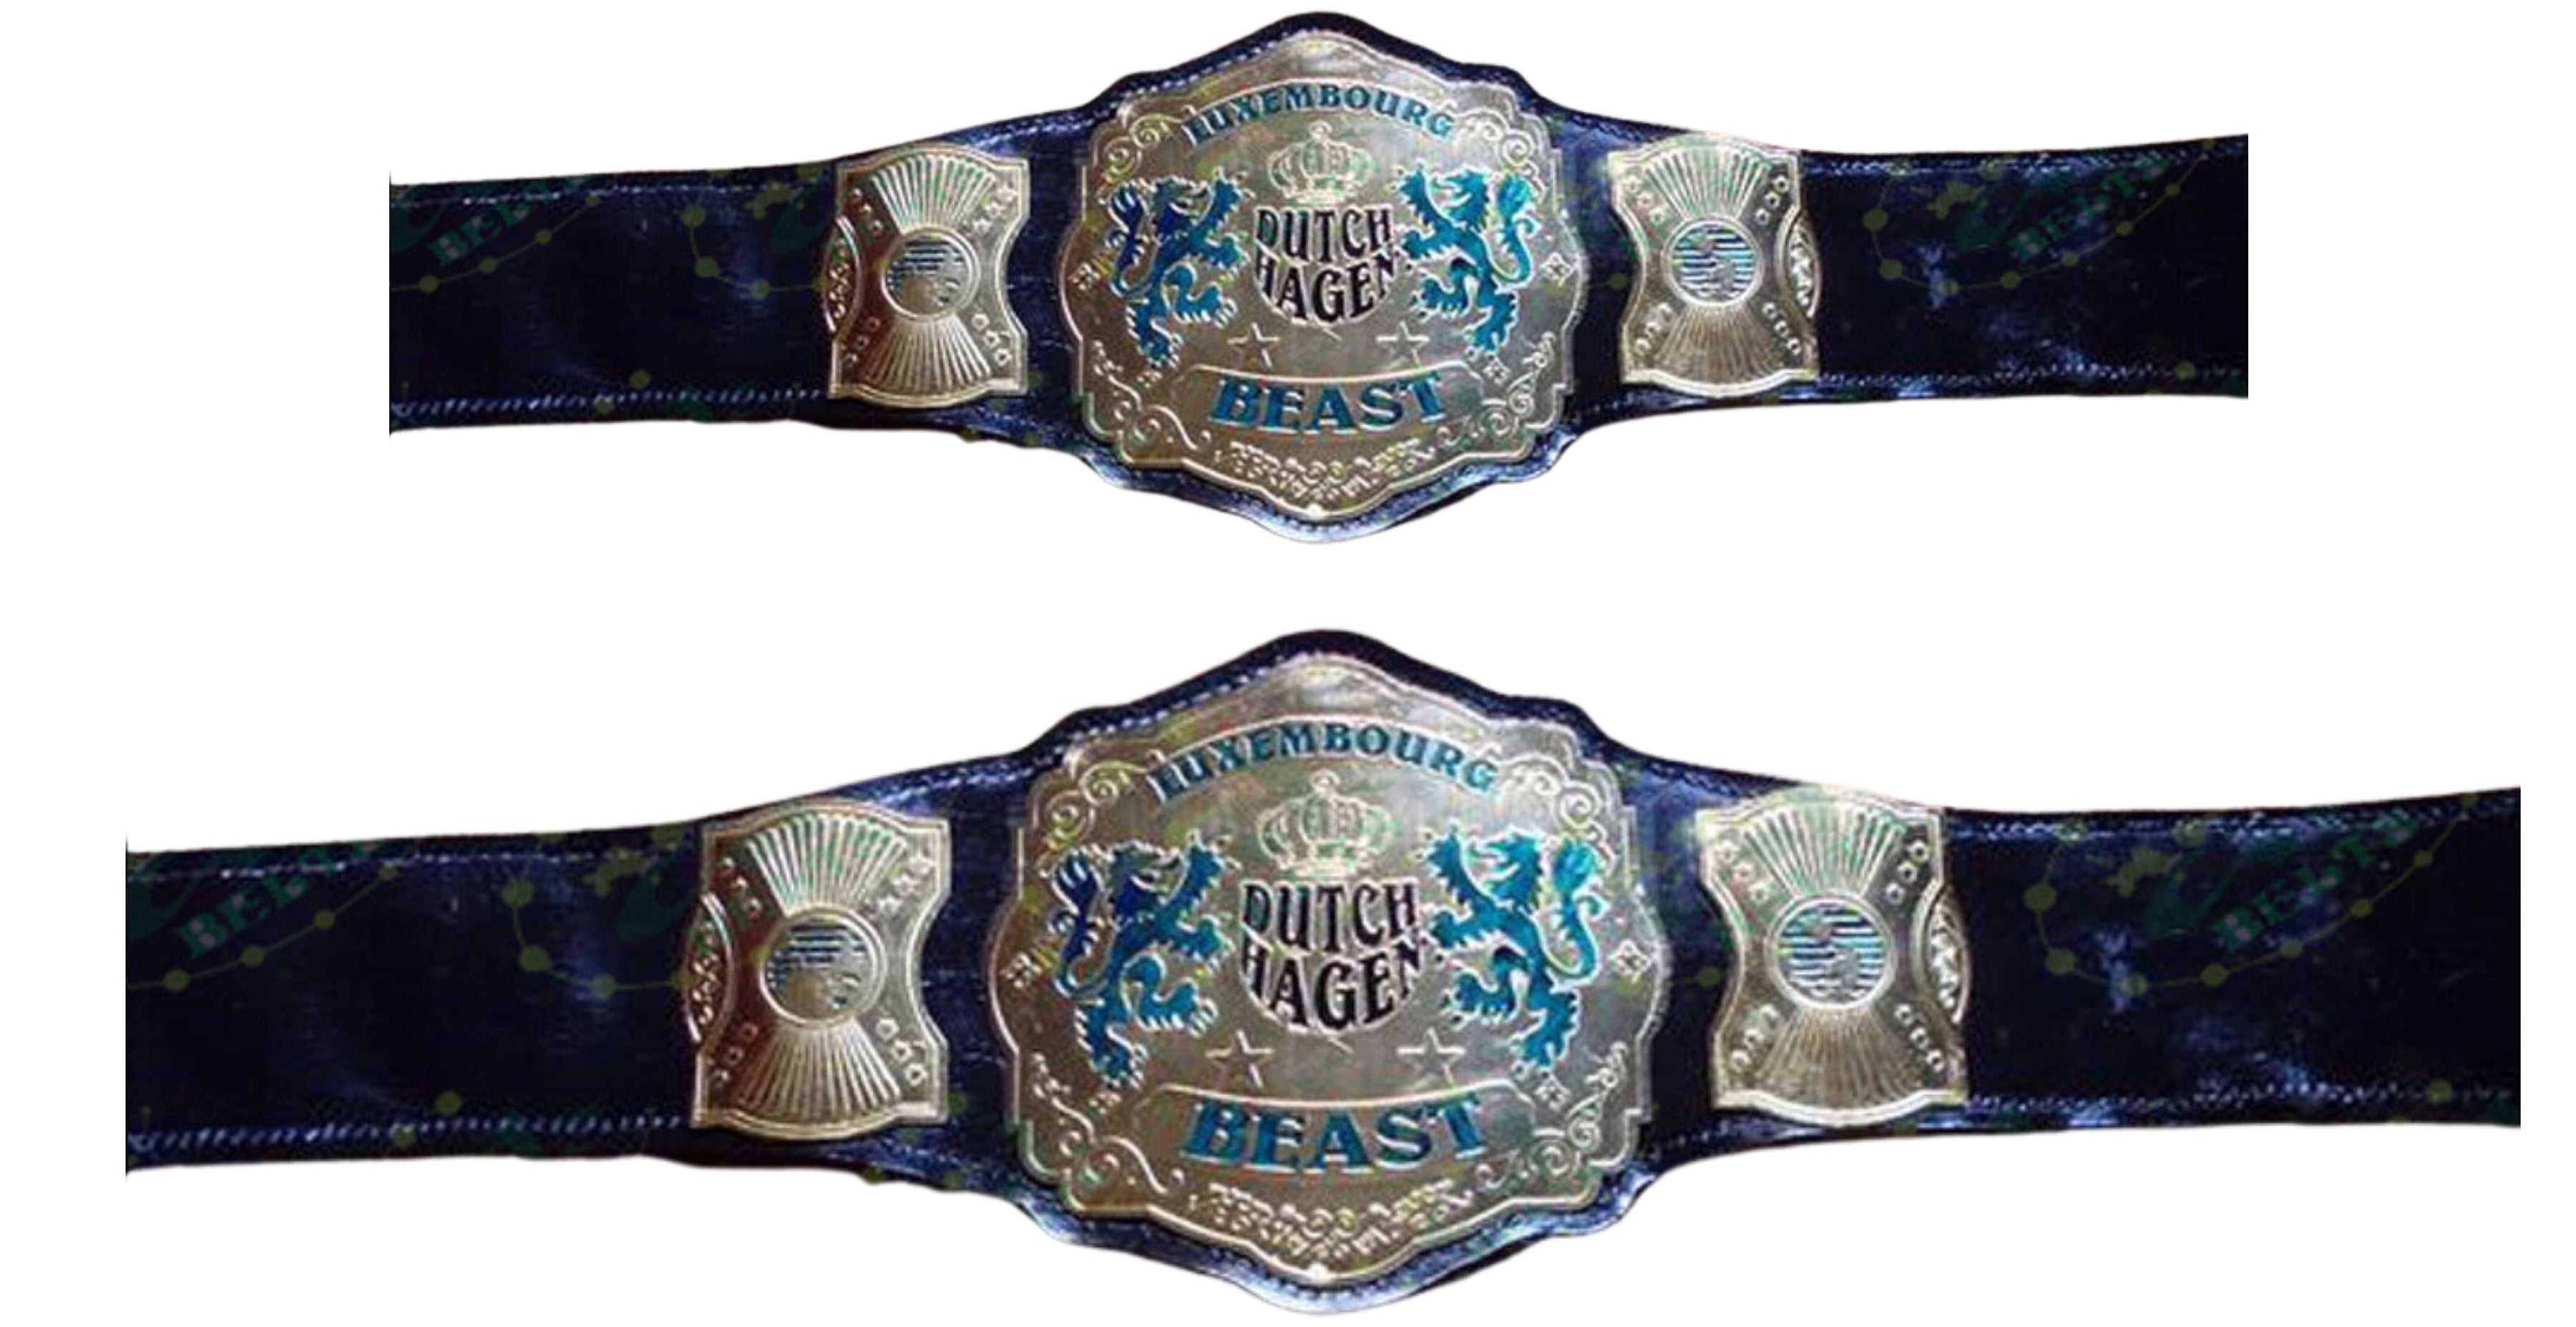 Wwe world intercontinental wrestling championship belt 2mm-005